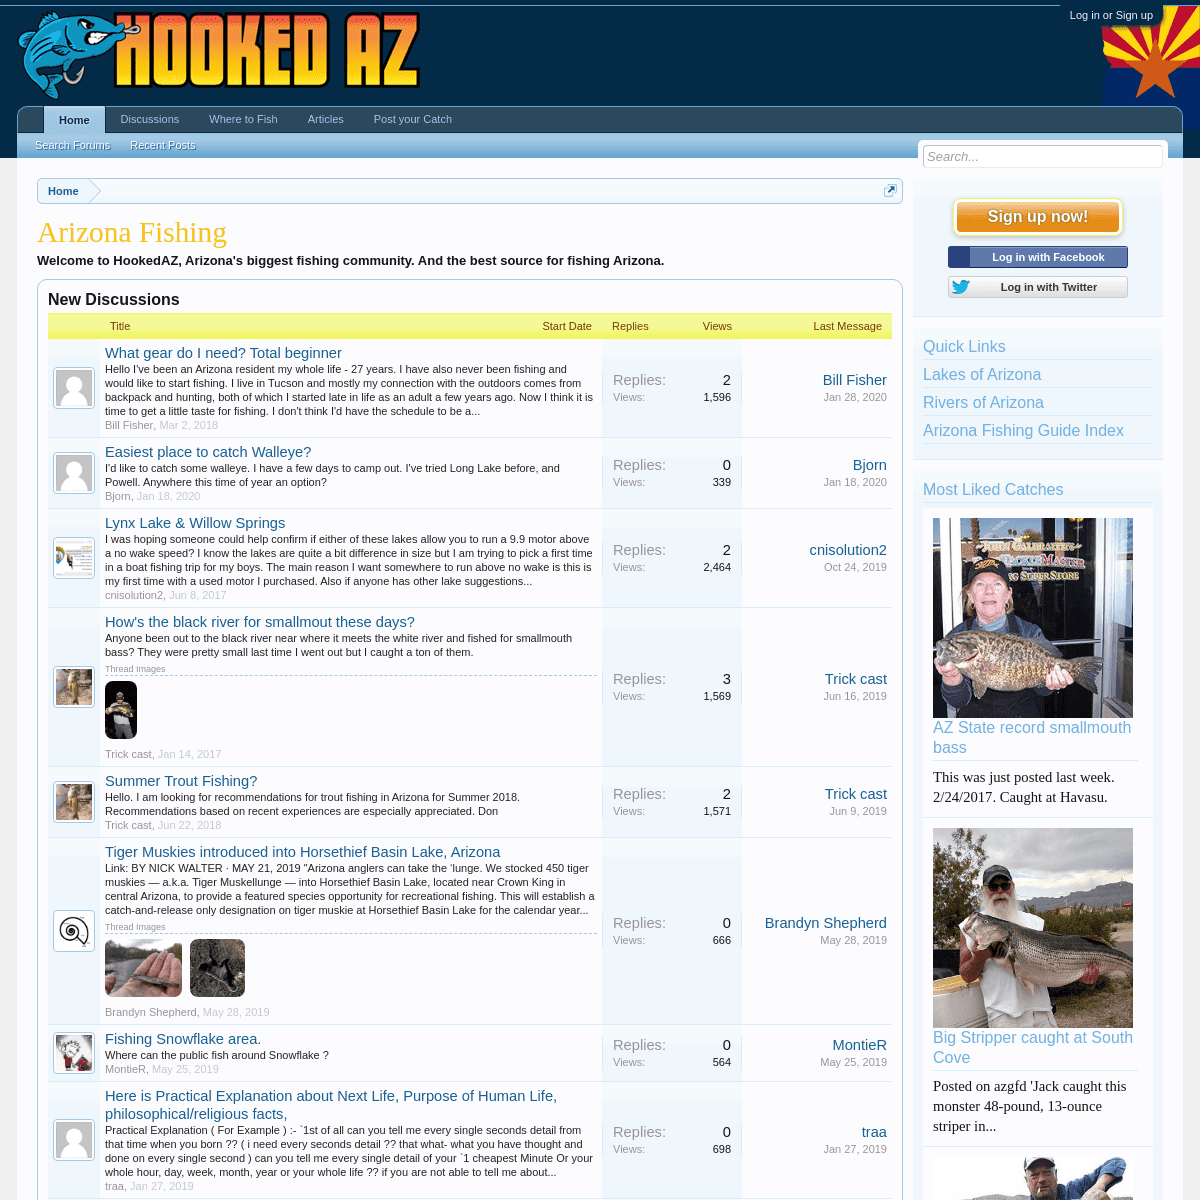 A complete backup of hookedaz.com